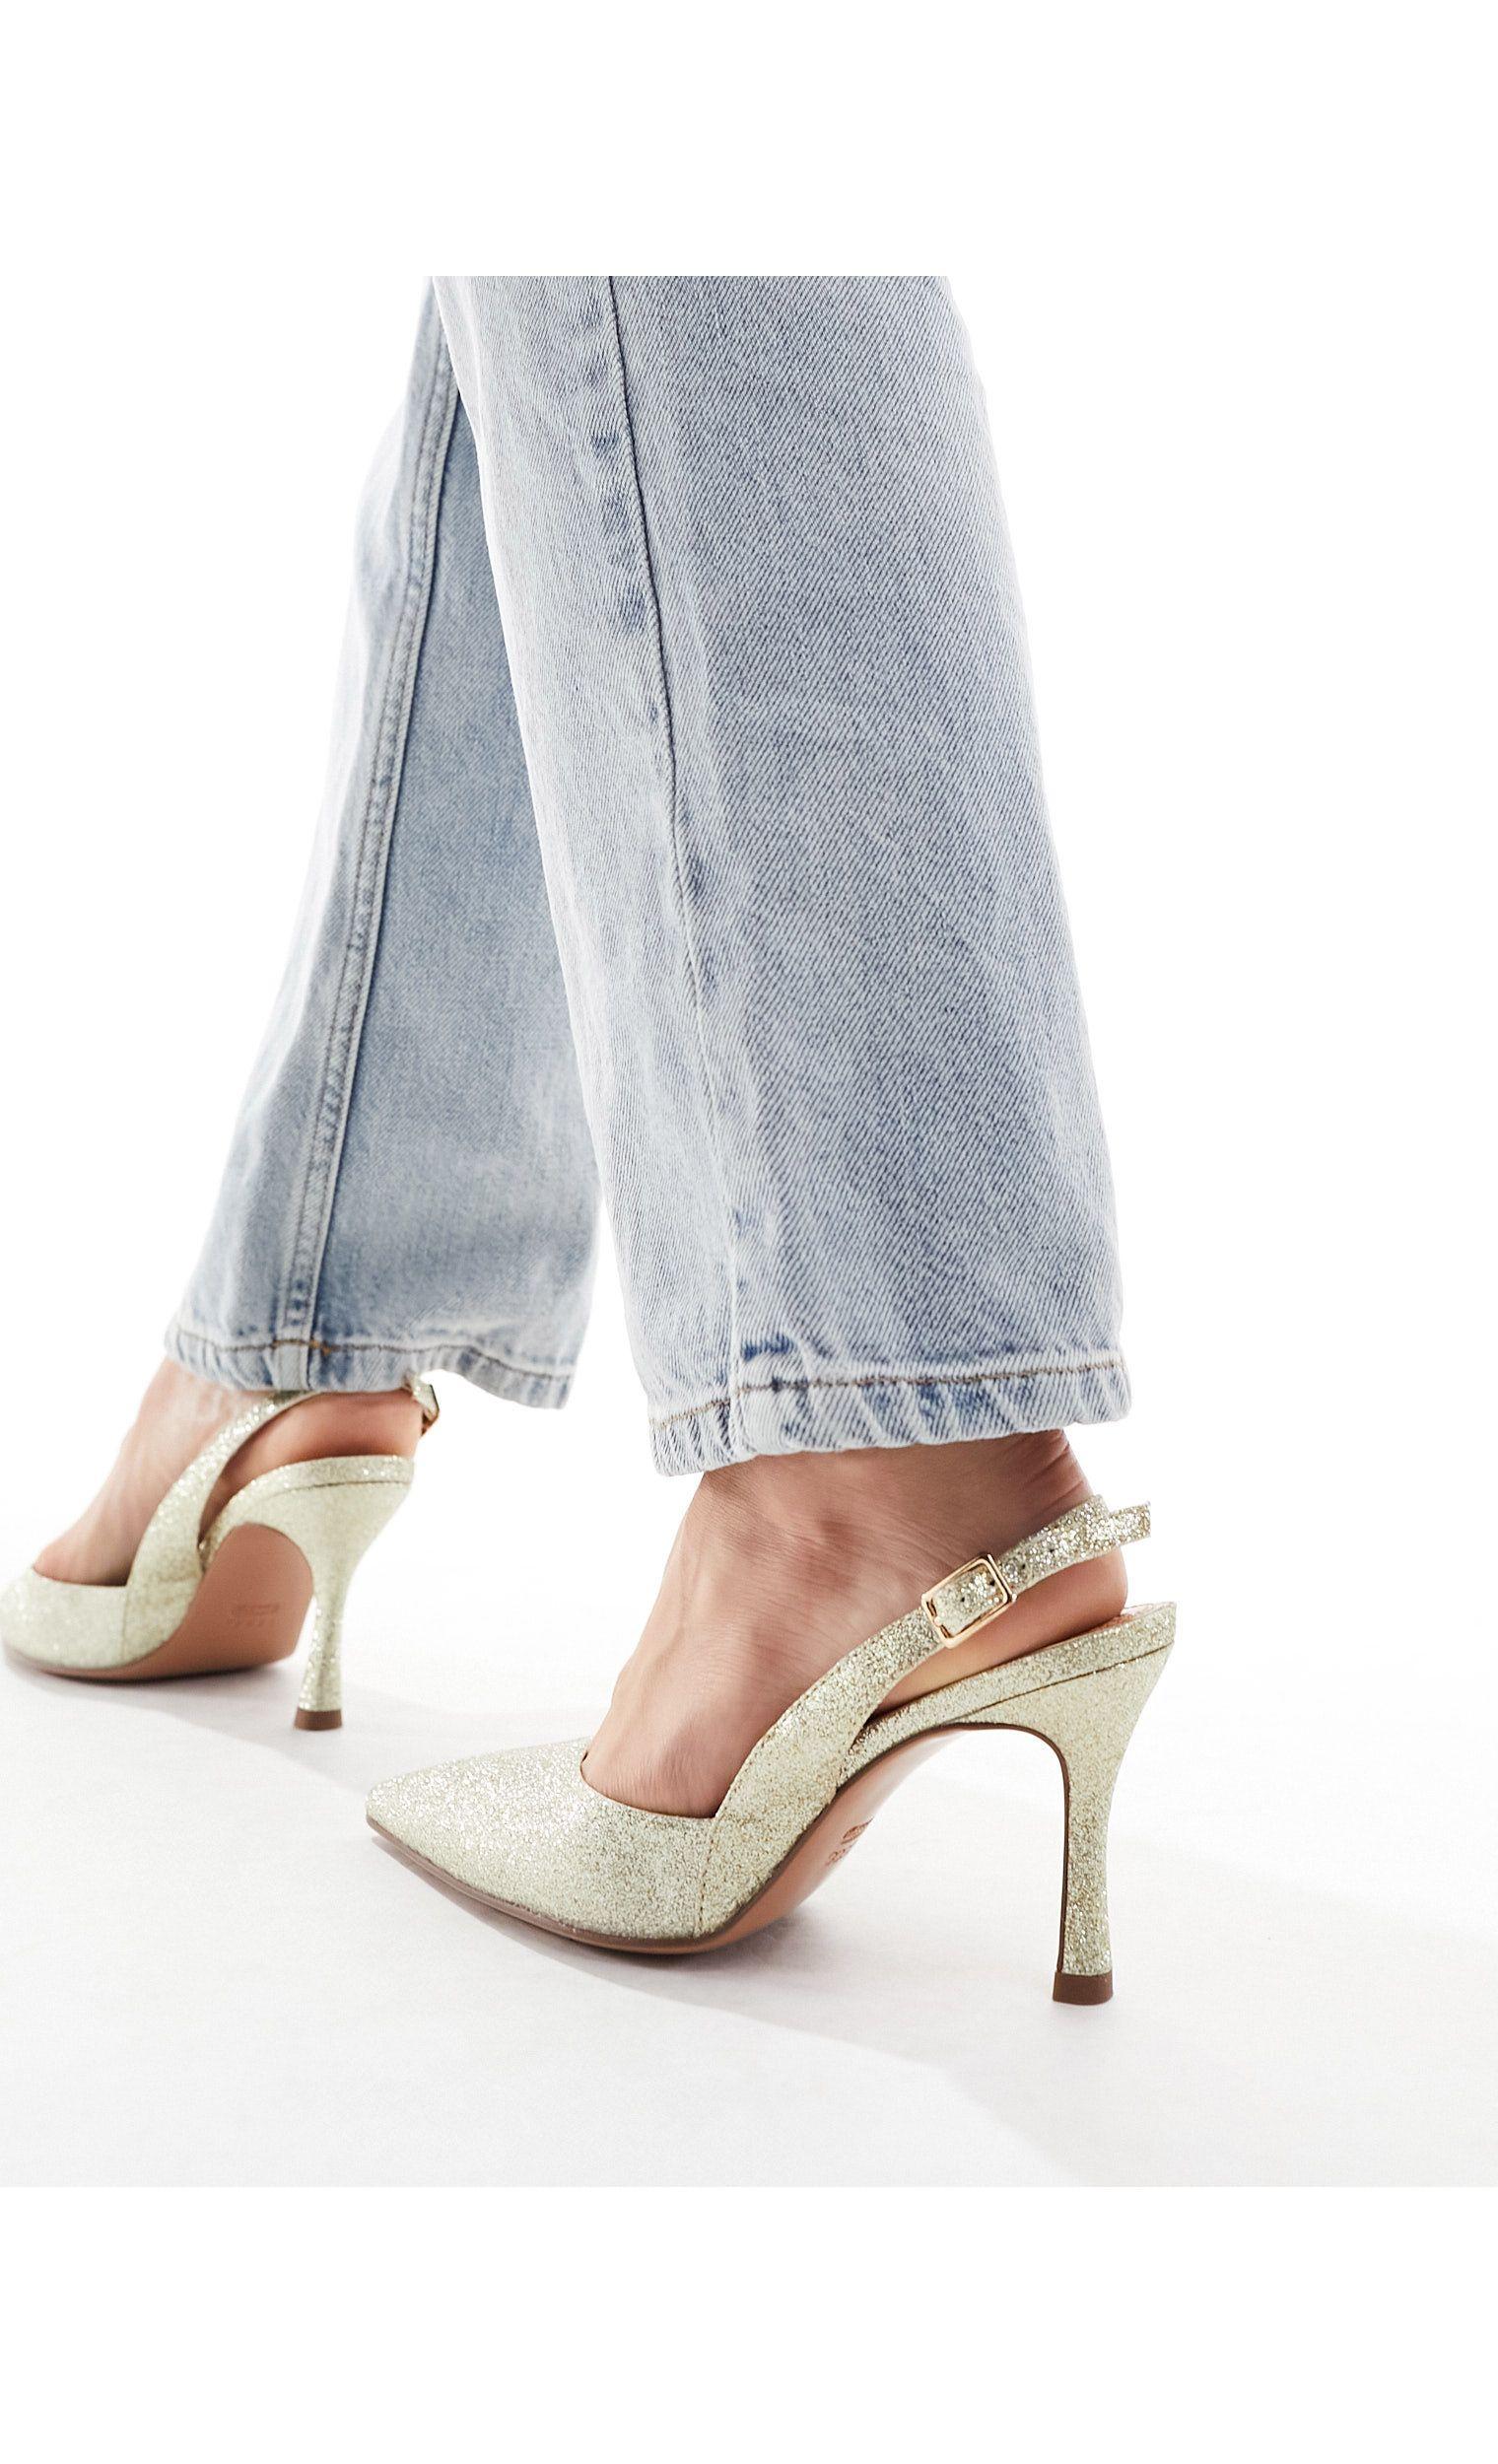 ASOS DESIGN Peri slingback high heeled shoes in gold | ASOS